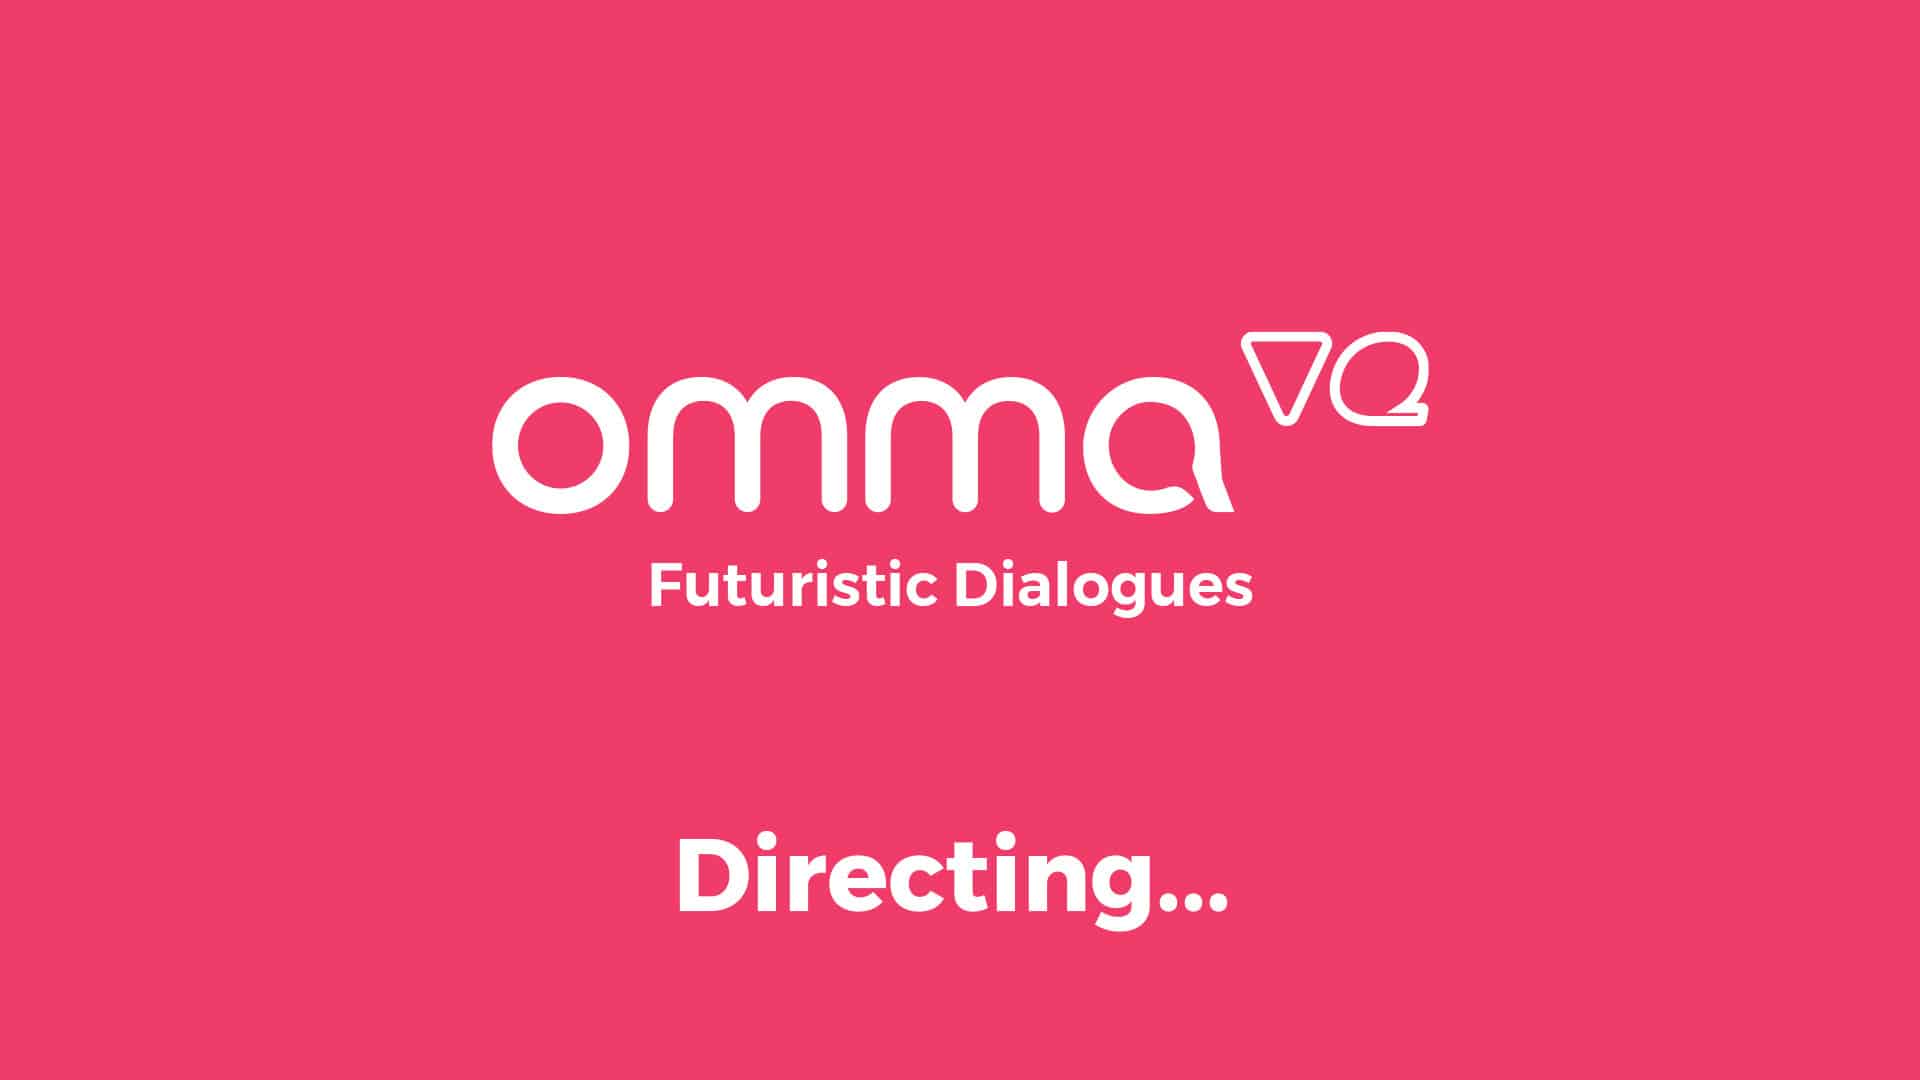 Redirecting to ommavq.com